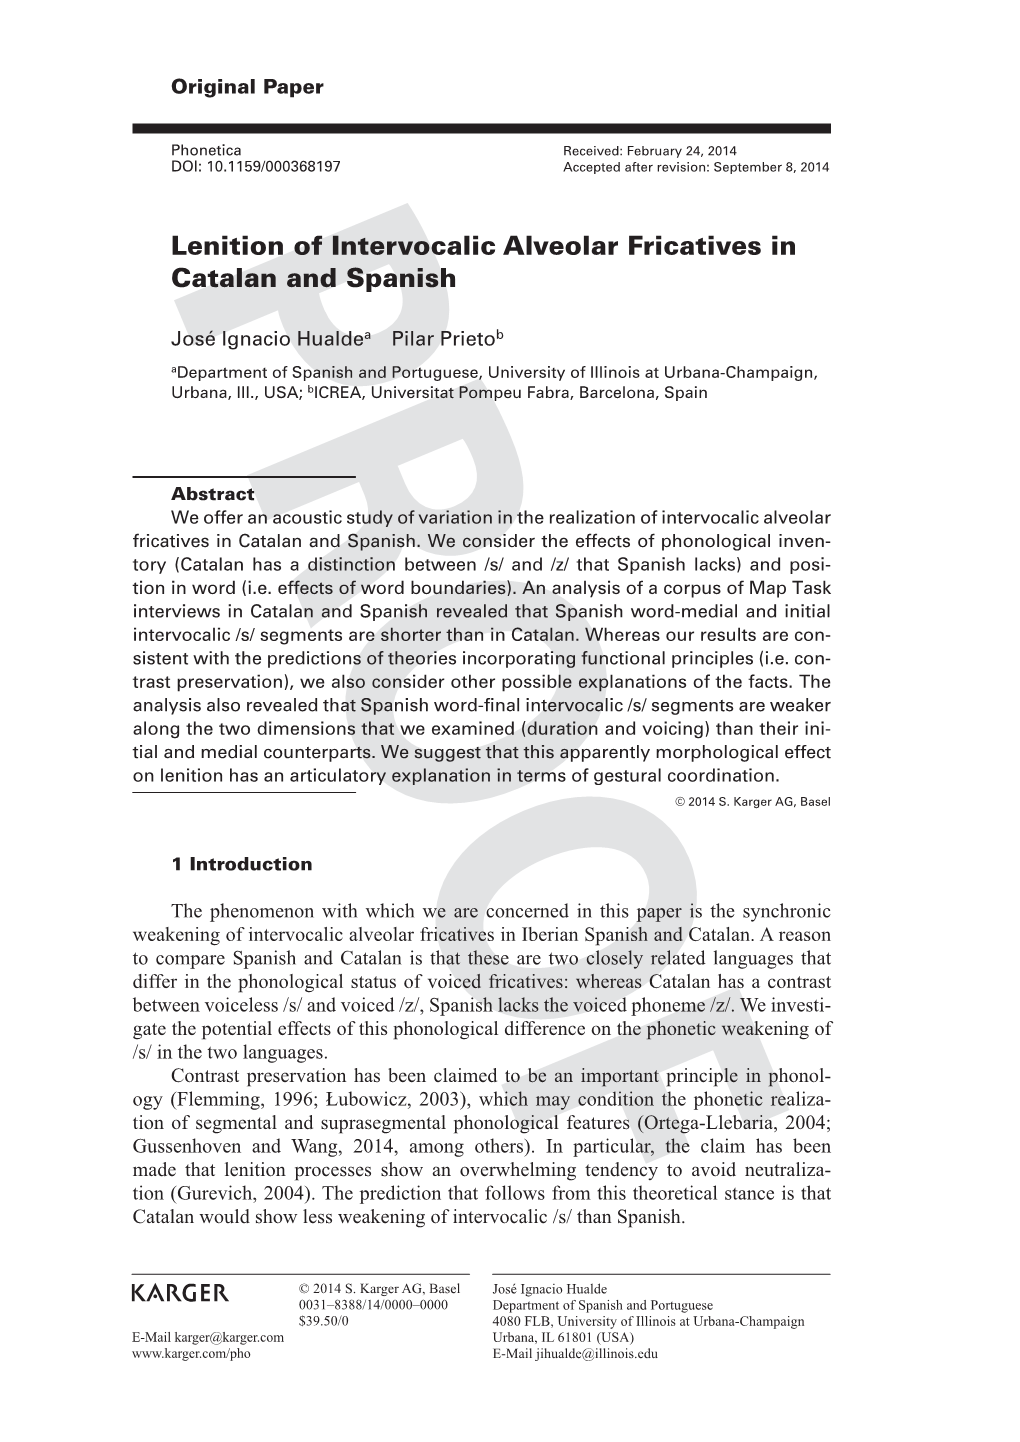 Lenition of Intervocalic Alveolar Fricatives in Catalan and Spanish